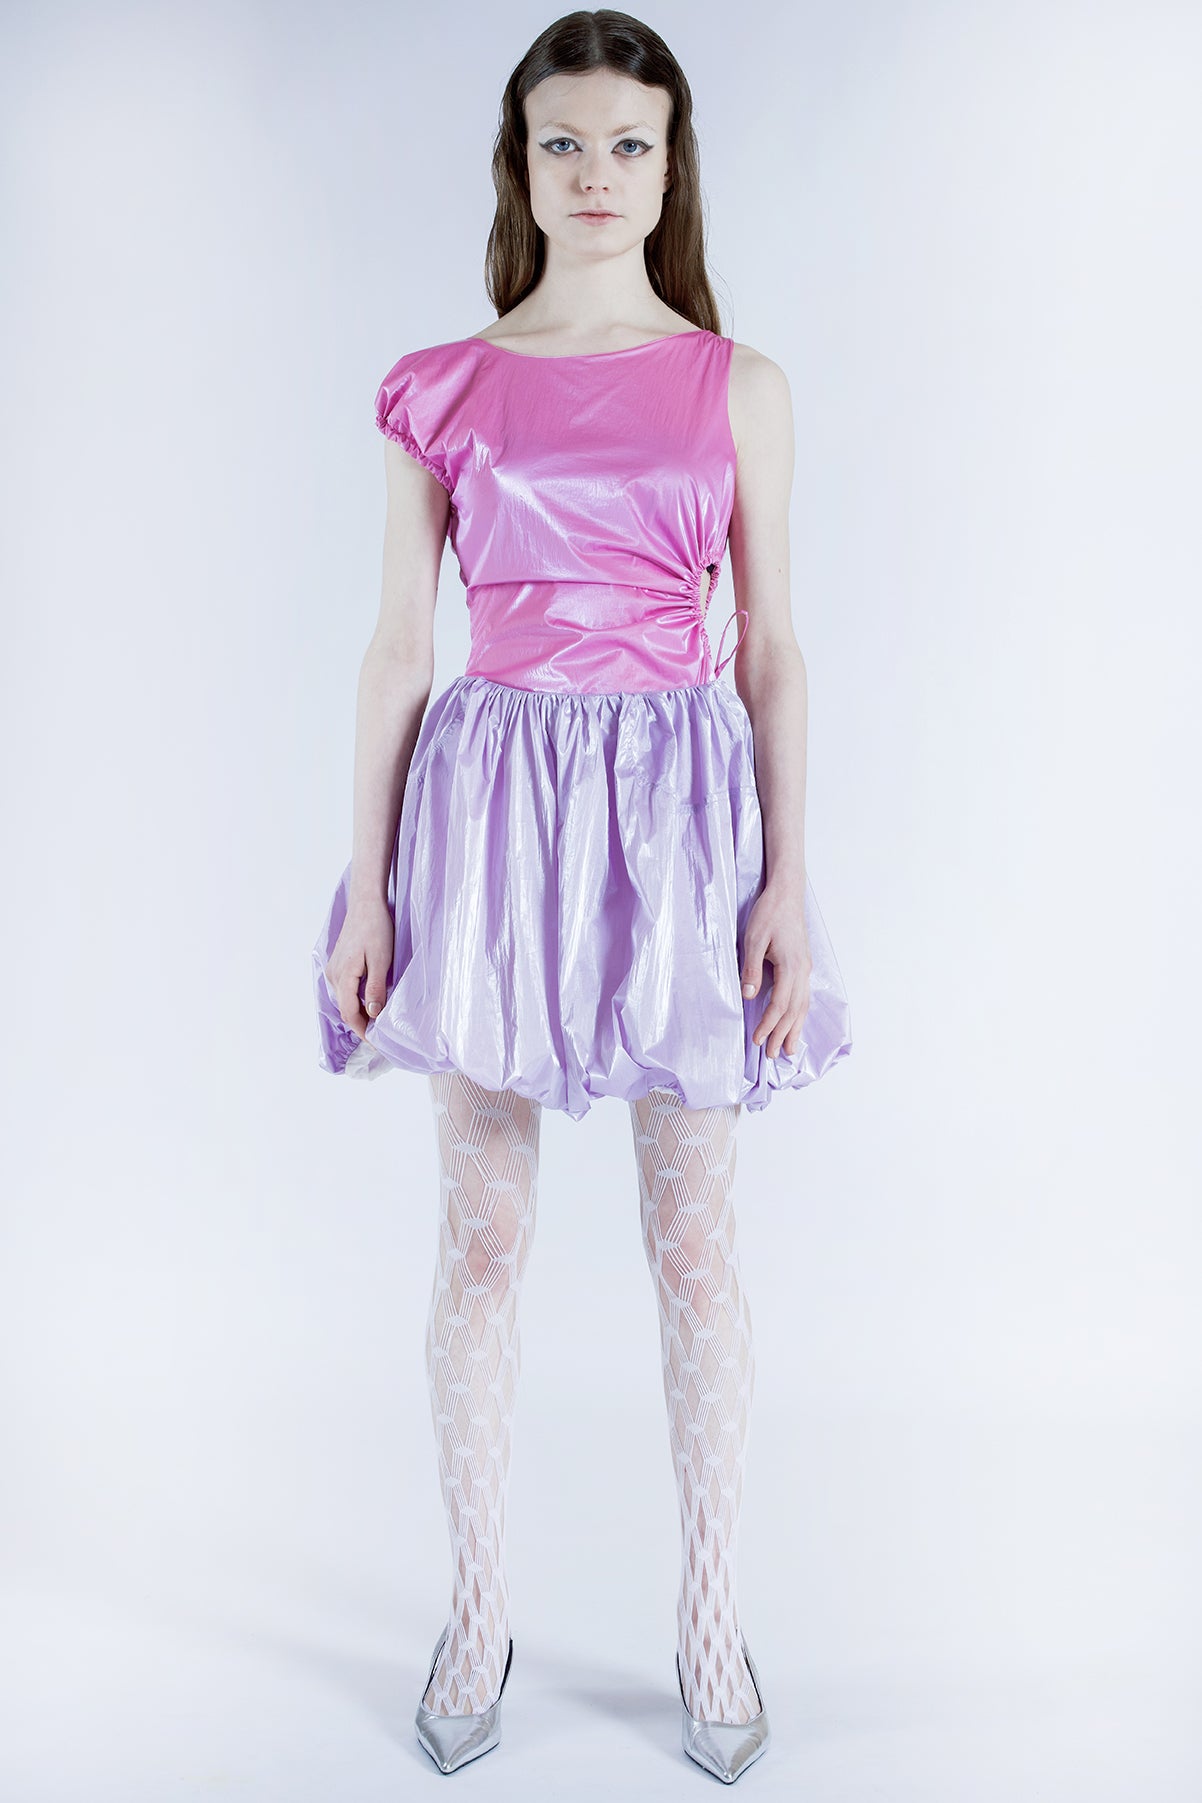 DANSHUU Shimmer Taro Pink Mini Skirt